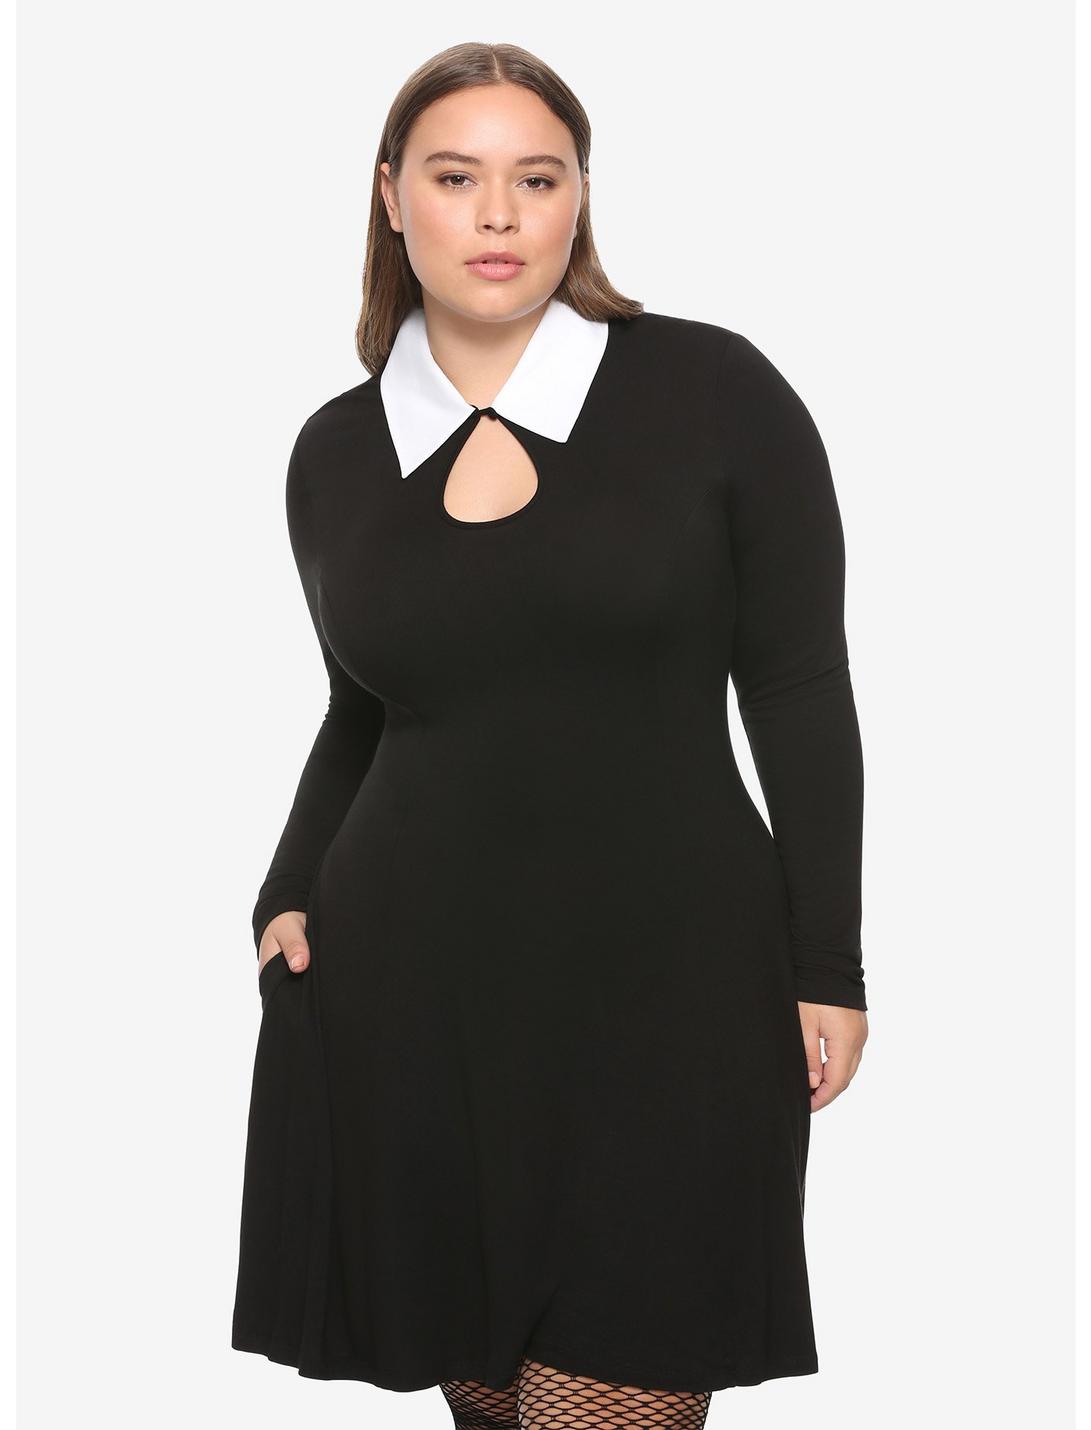 Black Keyhole Long-Sleeve Dress Plus Size, BLACK, hi-res